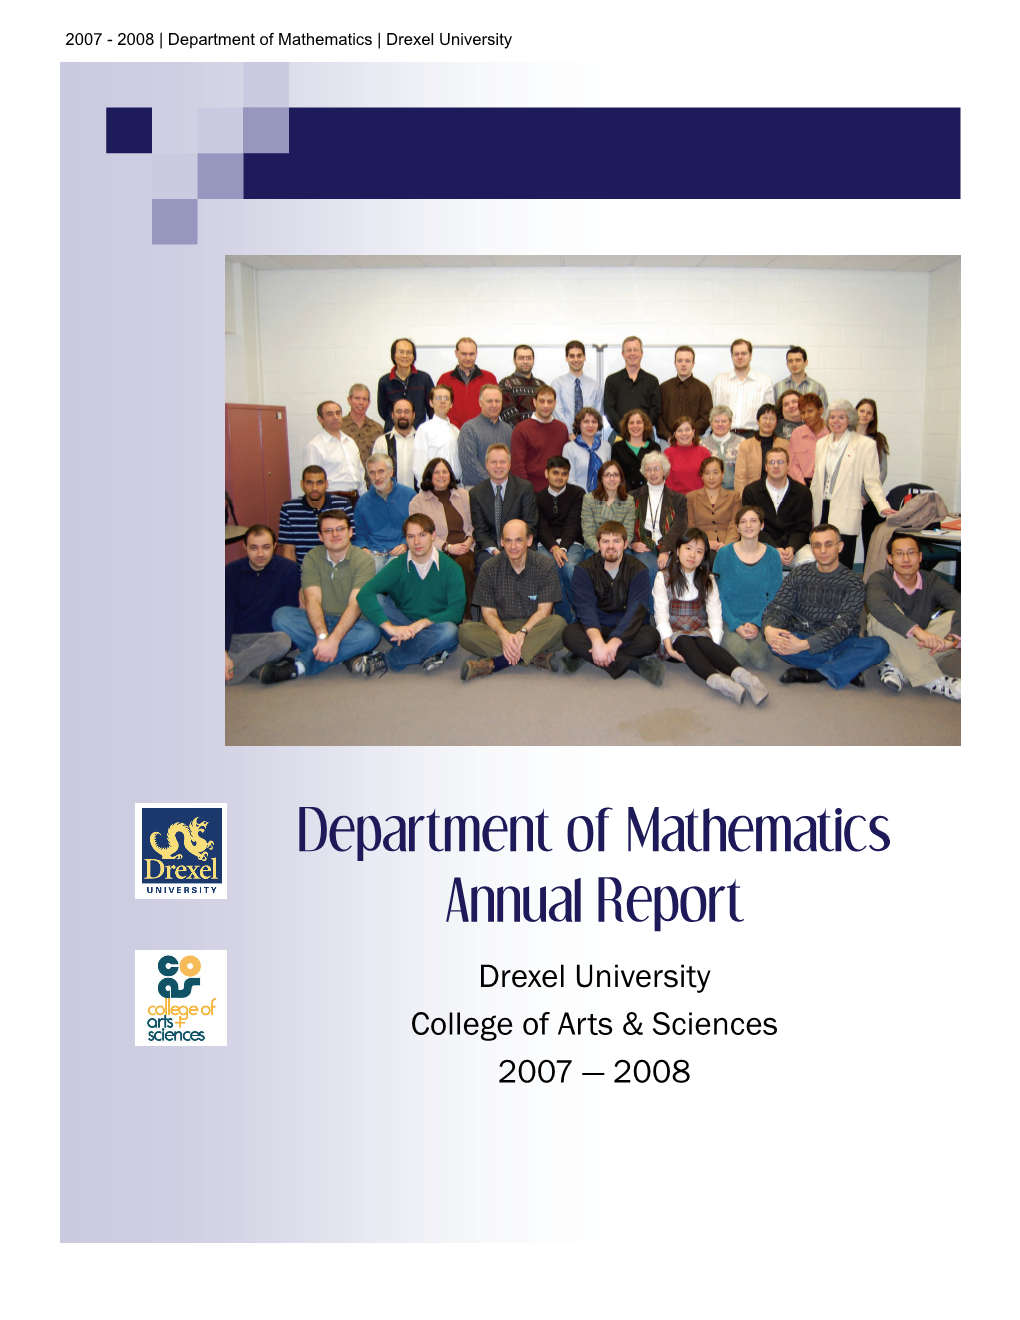 Department of Mathematics Annual Report Drexel University College of Arts & Sciences 2007 — 2008